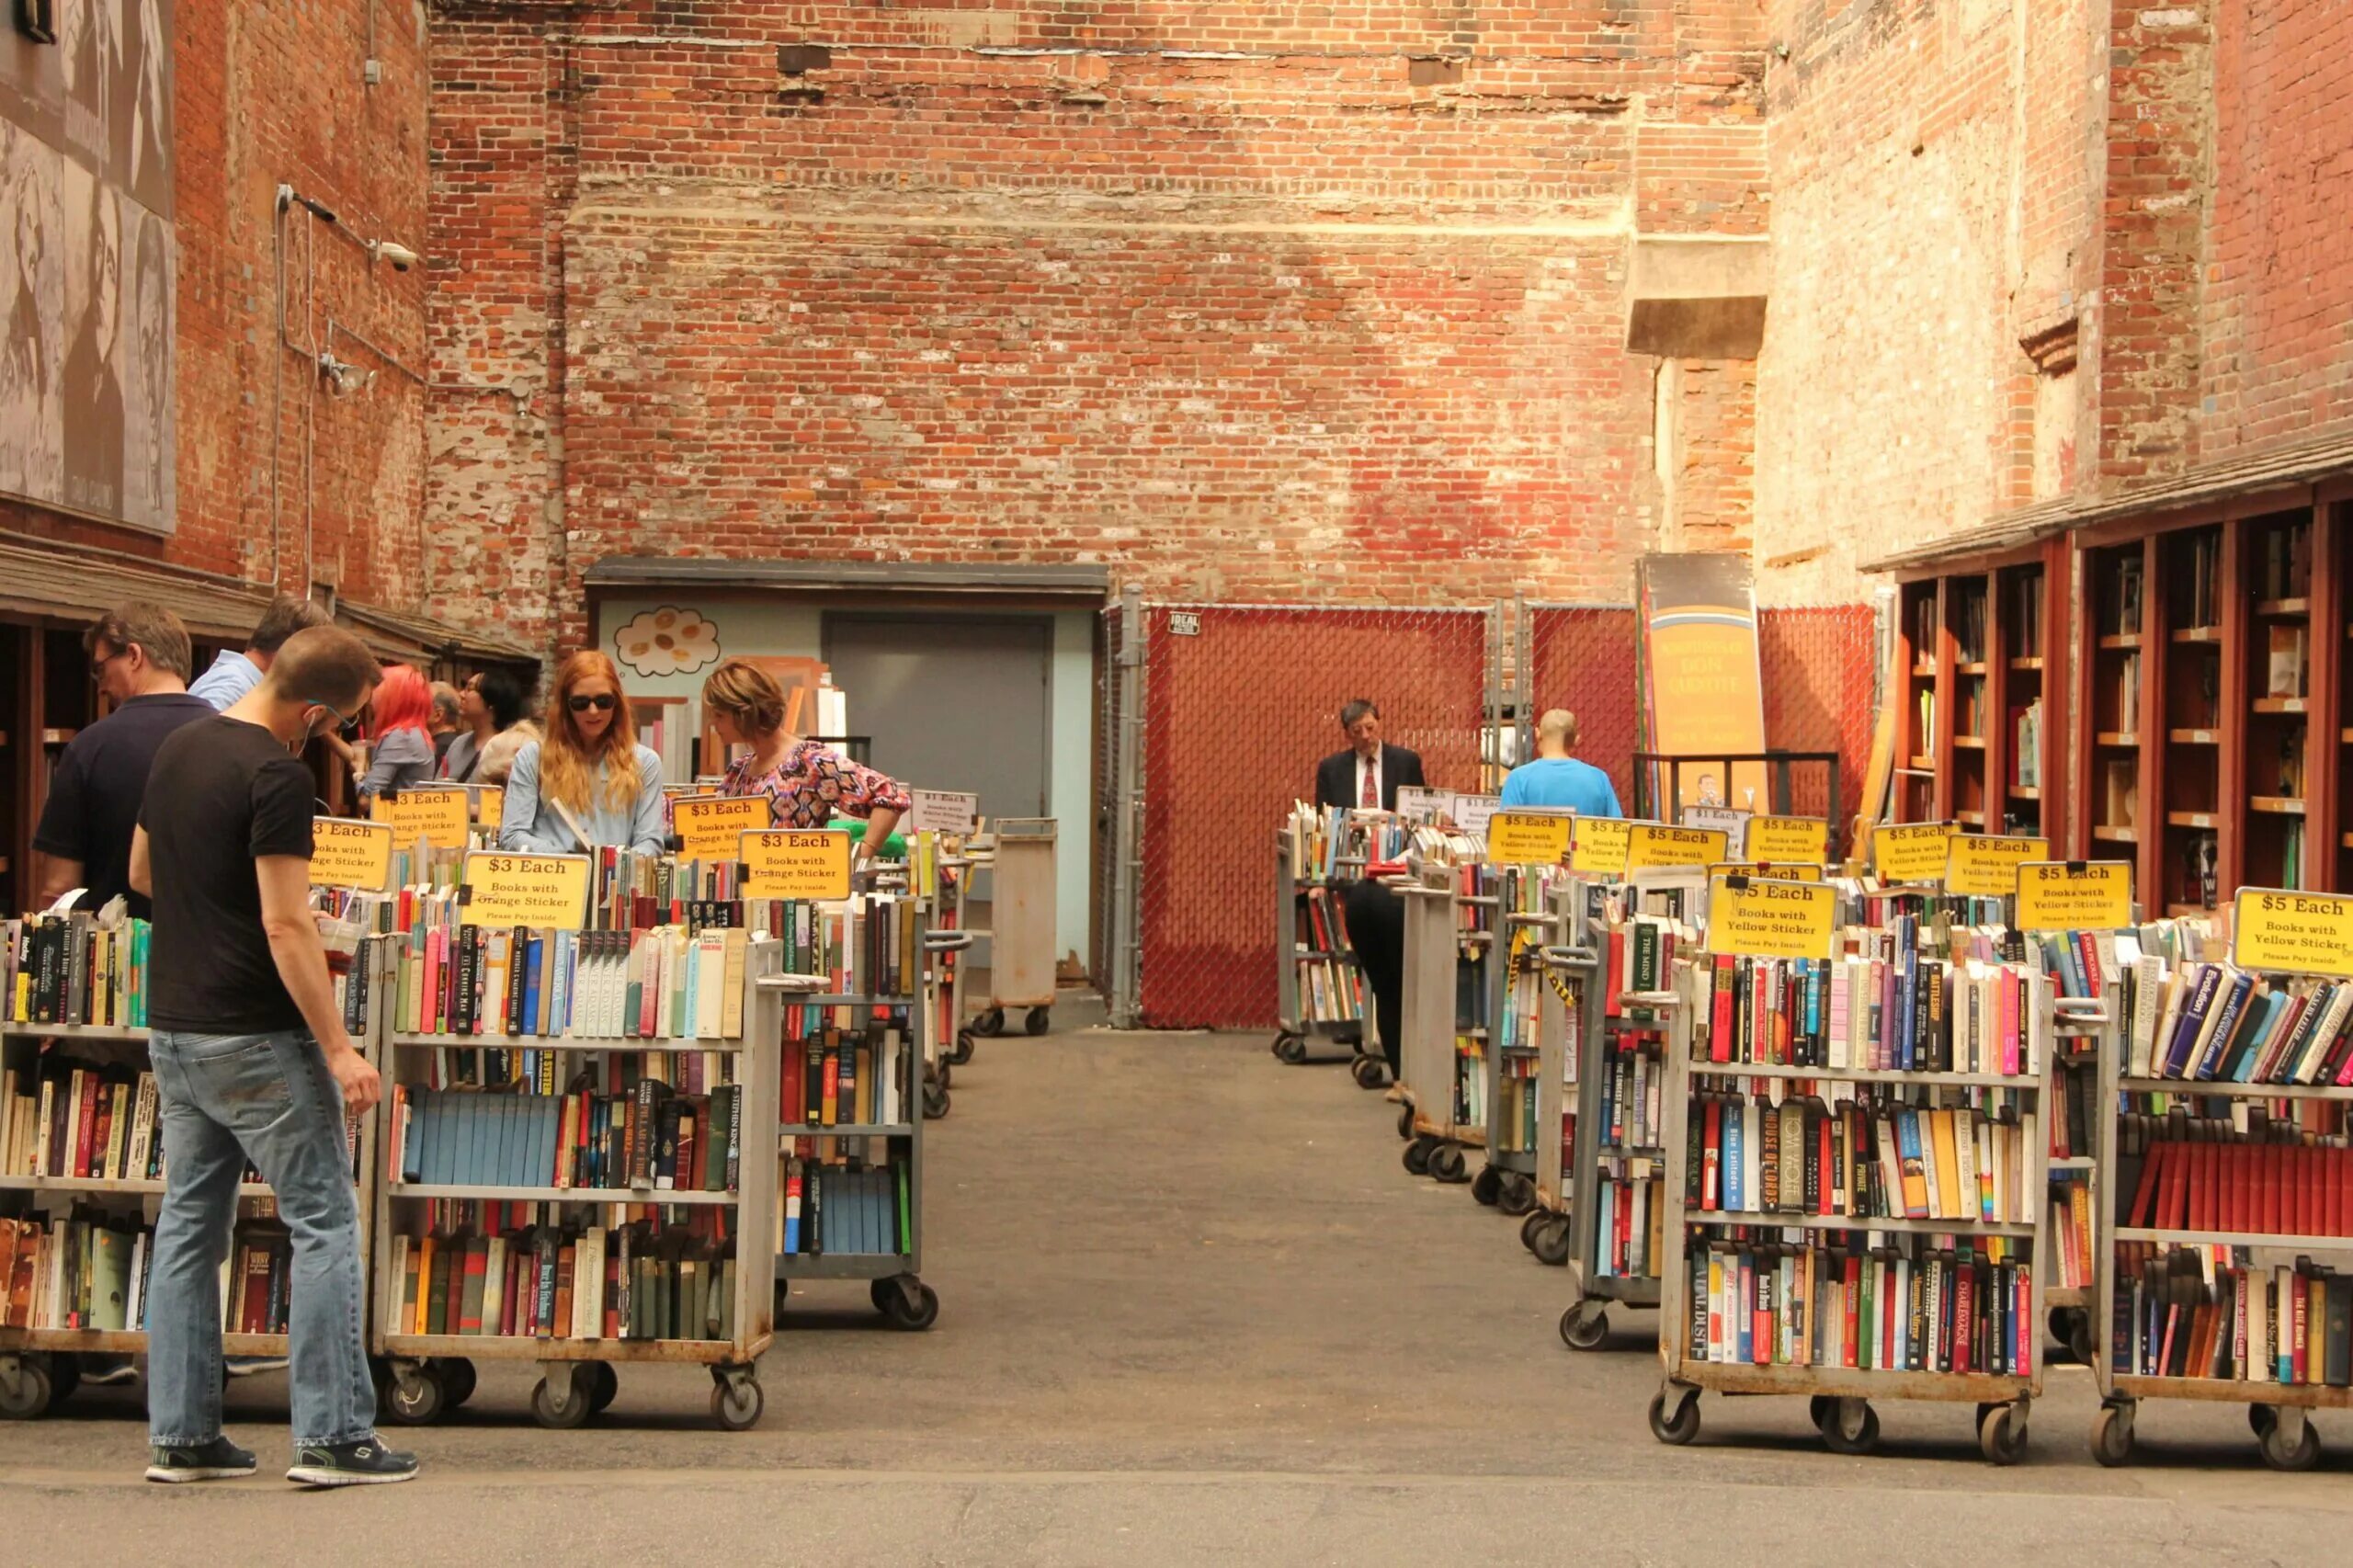 Brattle book shop в Бостоне, США. Бруклинский книжный фестиваль. Центр британской книги фотографии. Плакат Brattle book shop. The books in this shop are